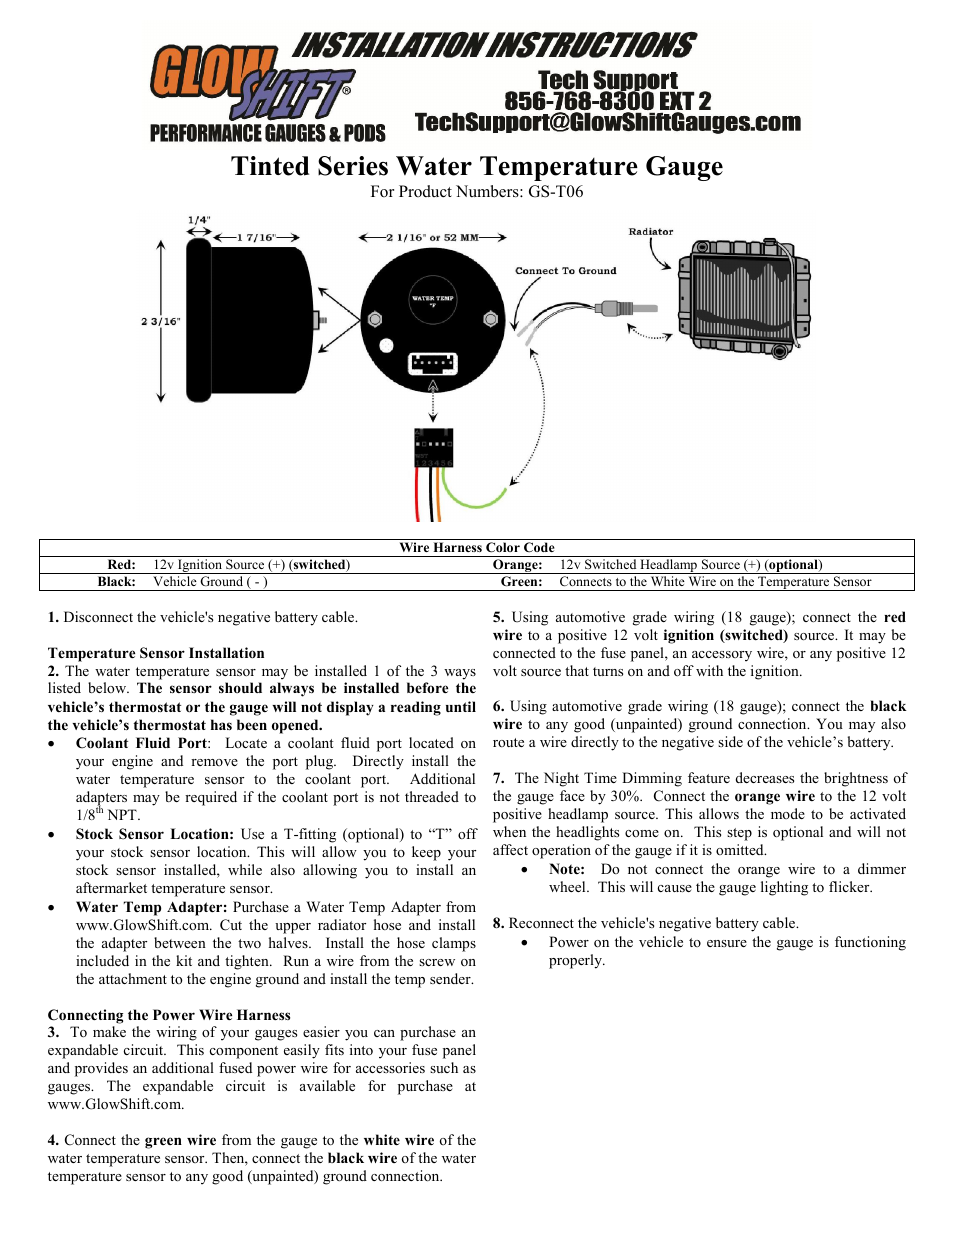 Glowshift Water Temperature Gauge User Manual